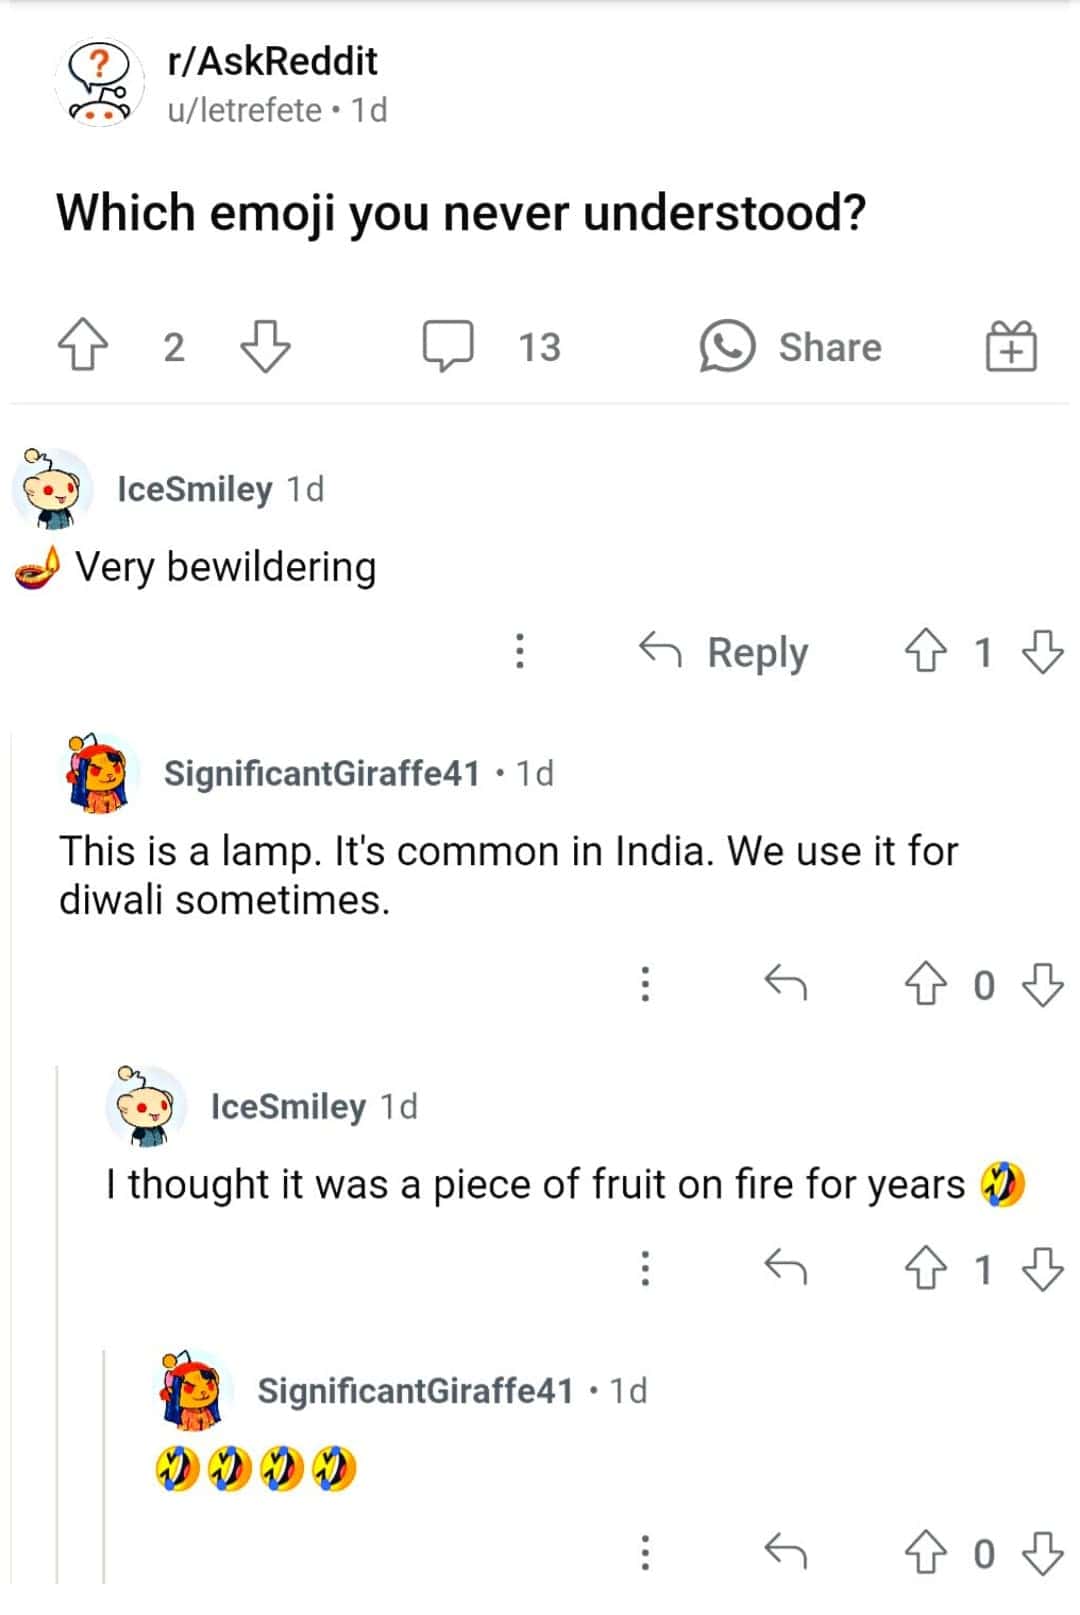 Lol : r/Hindumeme